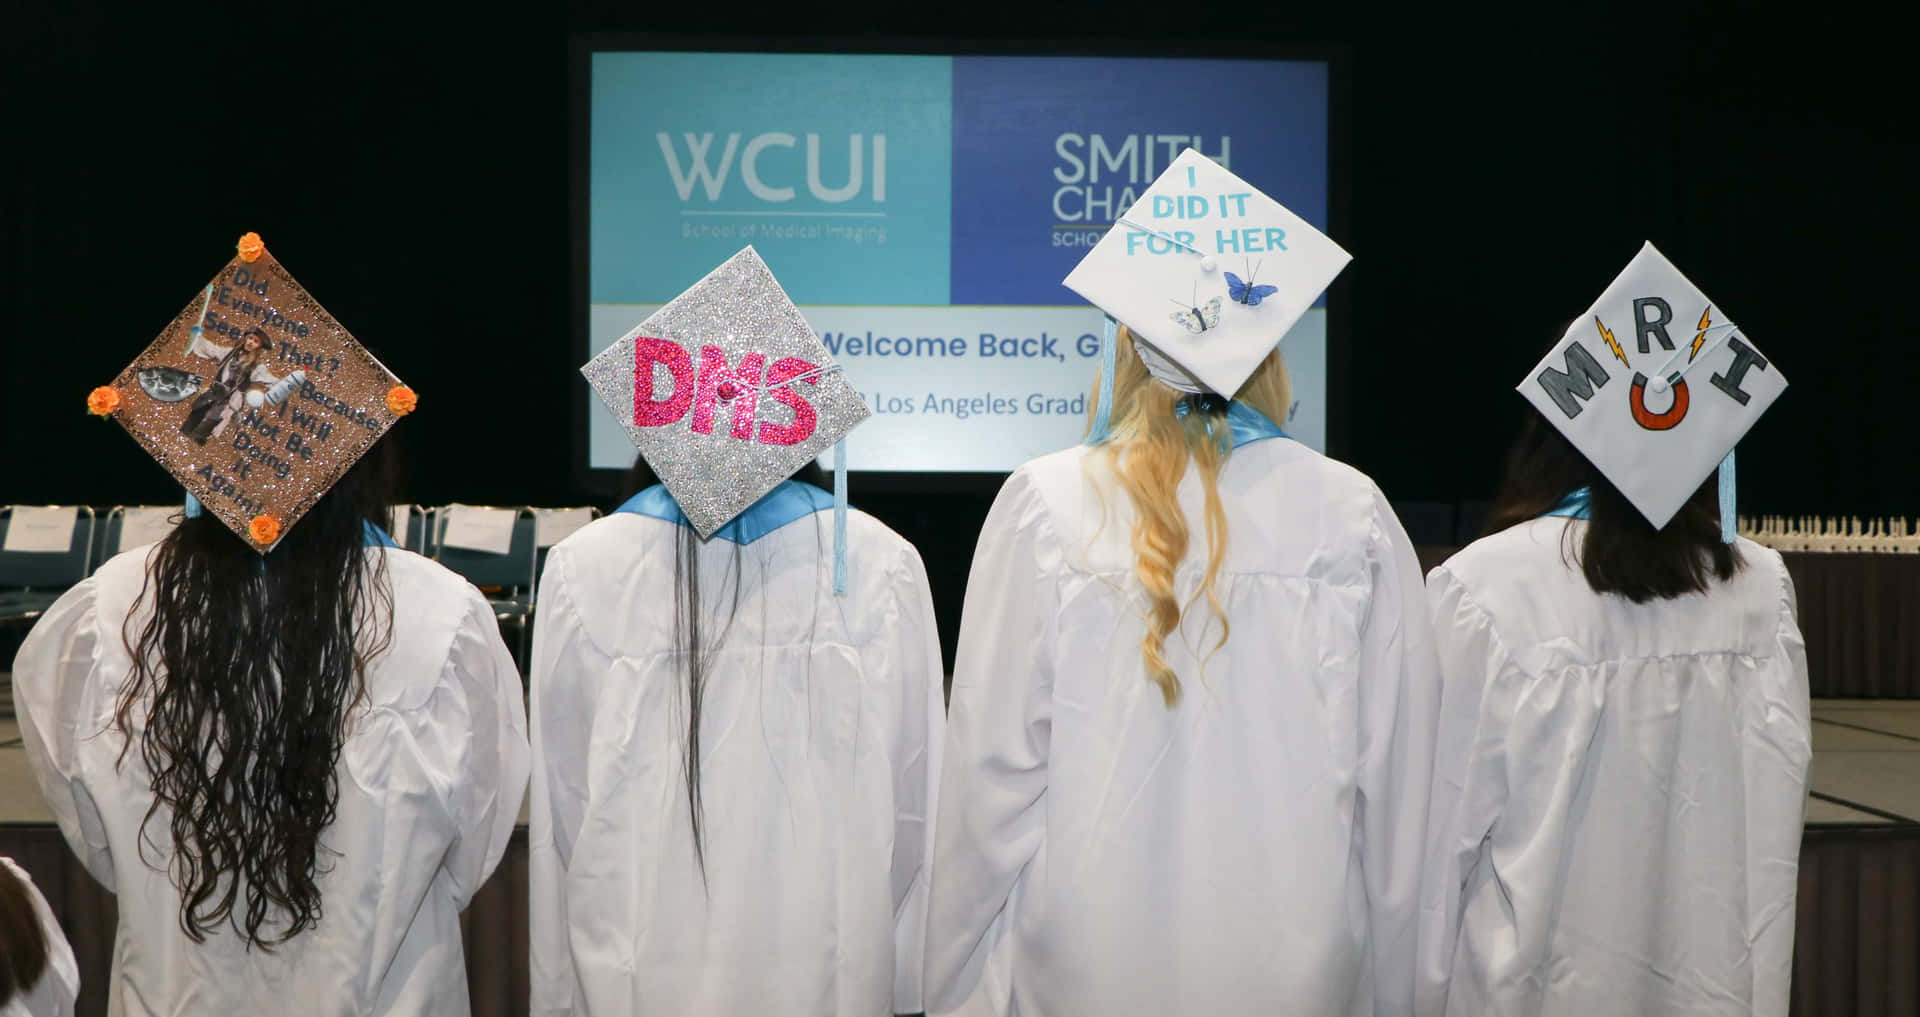 Wccu Graduates Wear Graduation Caps With Their Names On Them